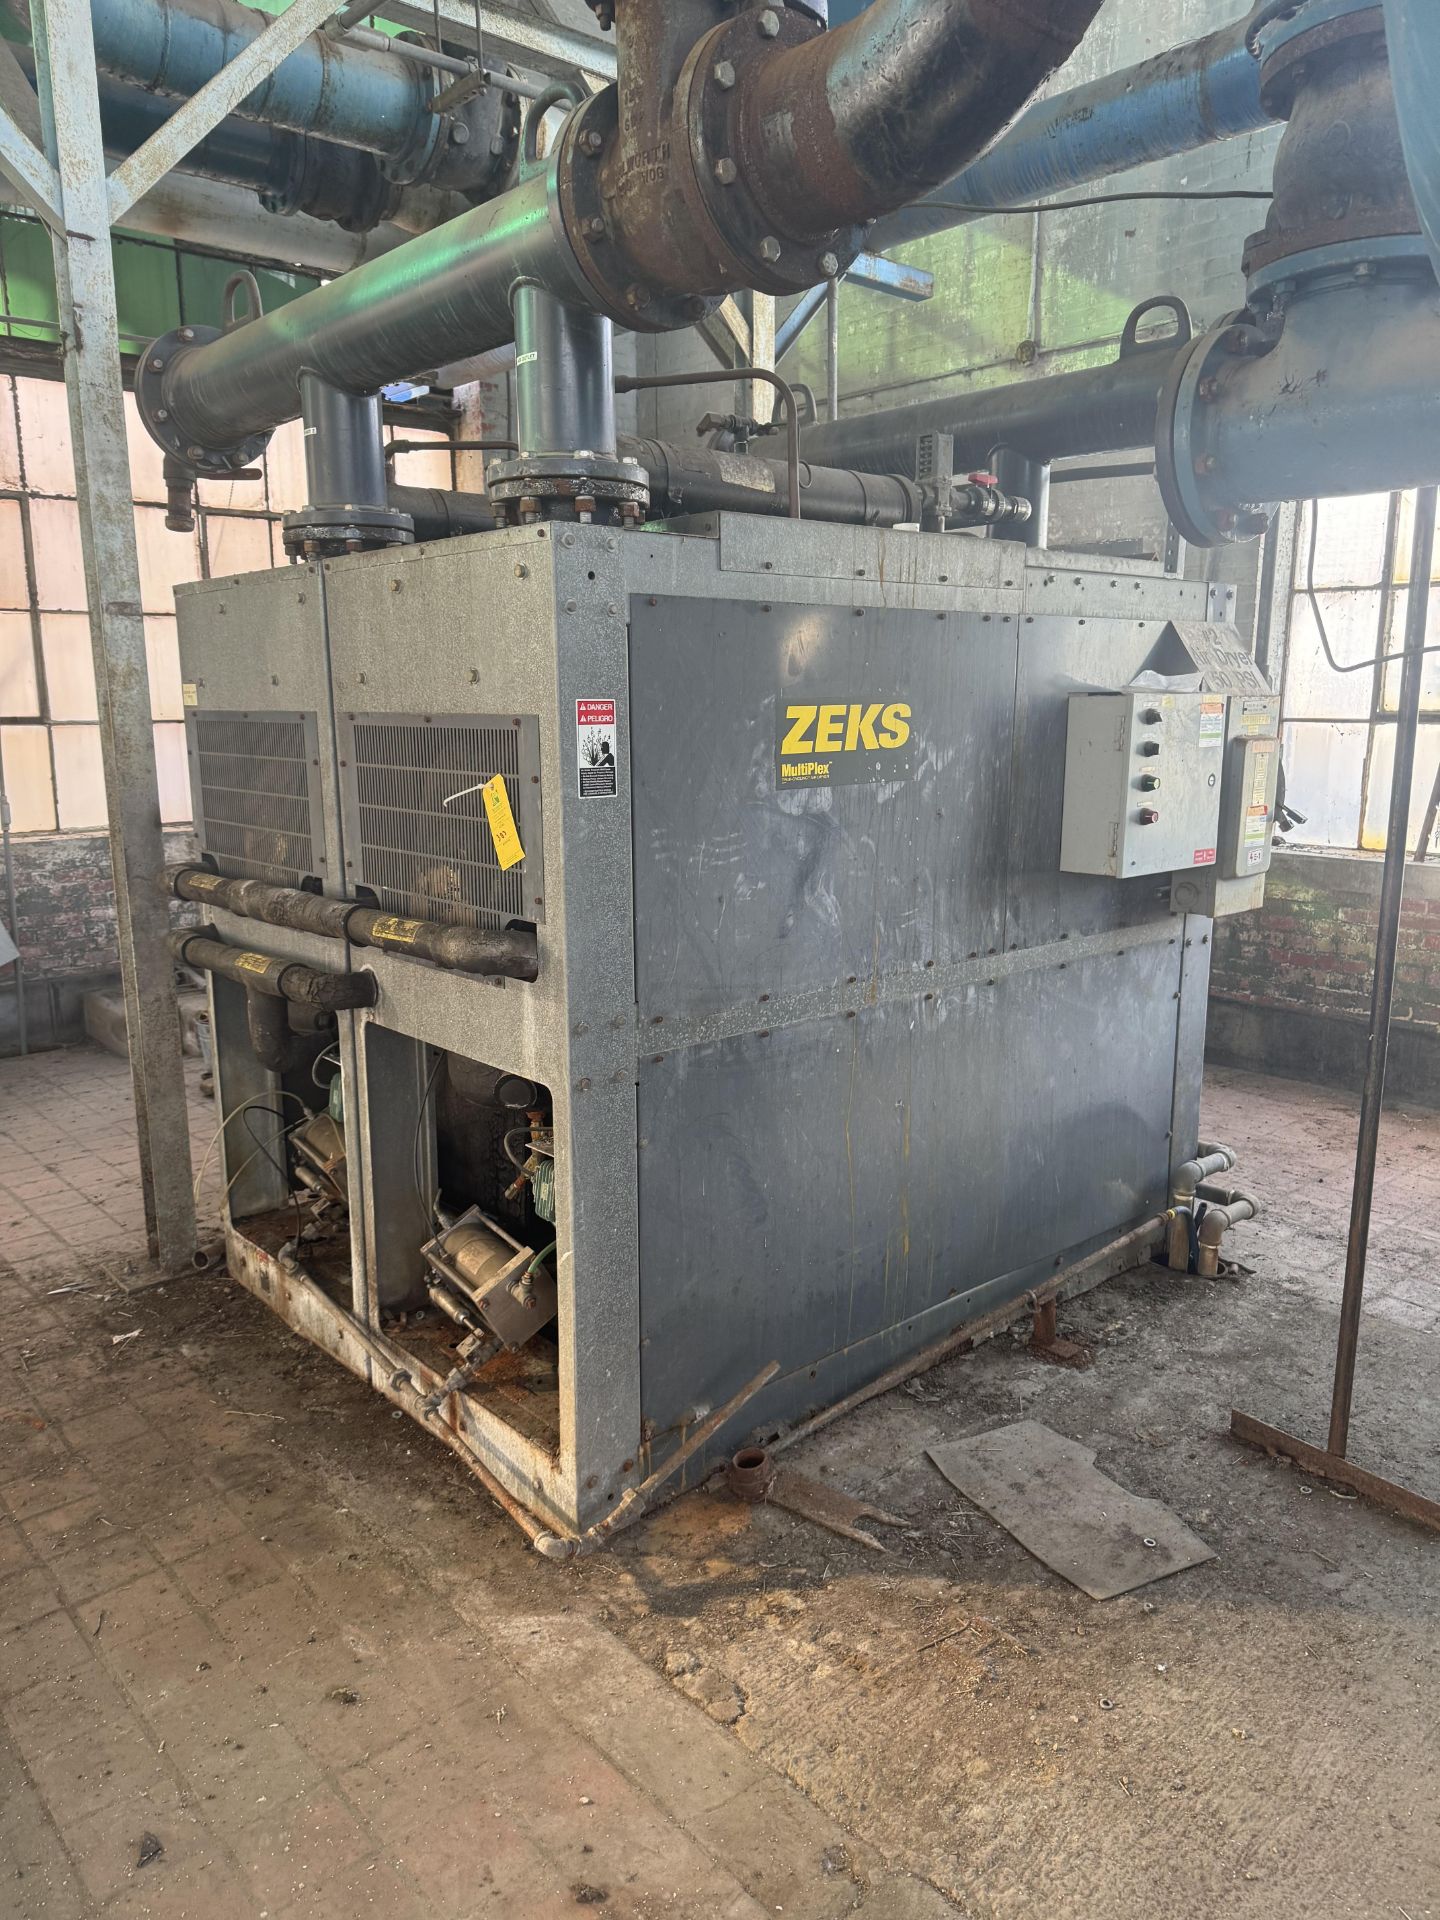 Zeks MultiPlex Air Dryer, Model# 4800HSFMC400, Serial#254975 M305, 460V, Rigging/ Removal Fee - Image 2 of 6